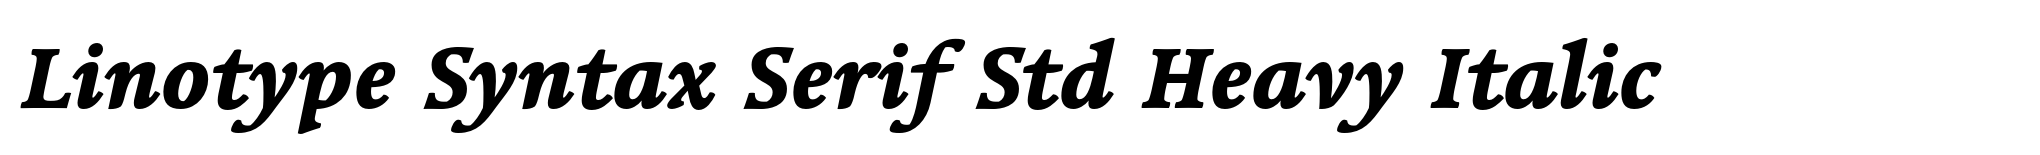 Linotype Syntax Serif Std Heavy Italic image